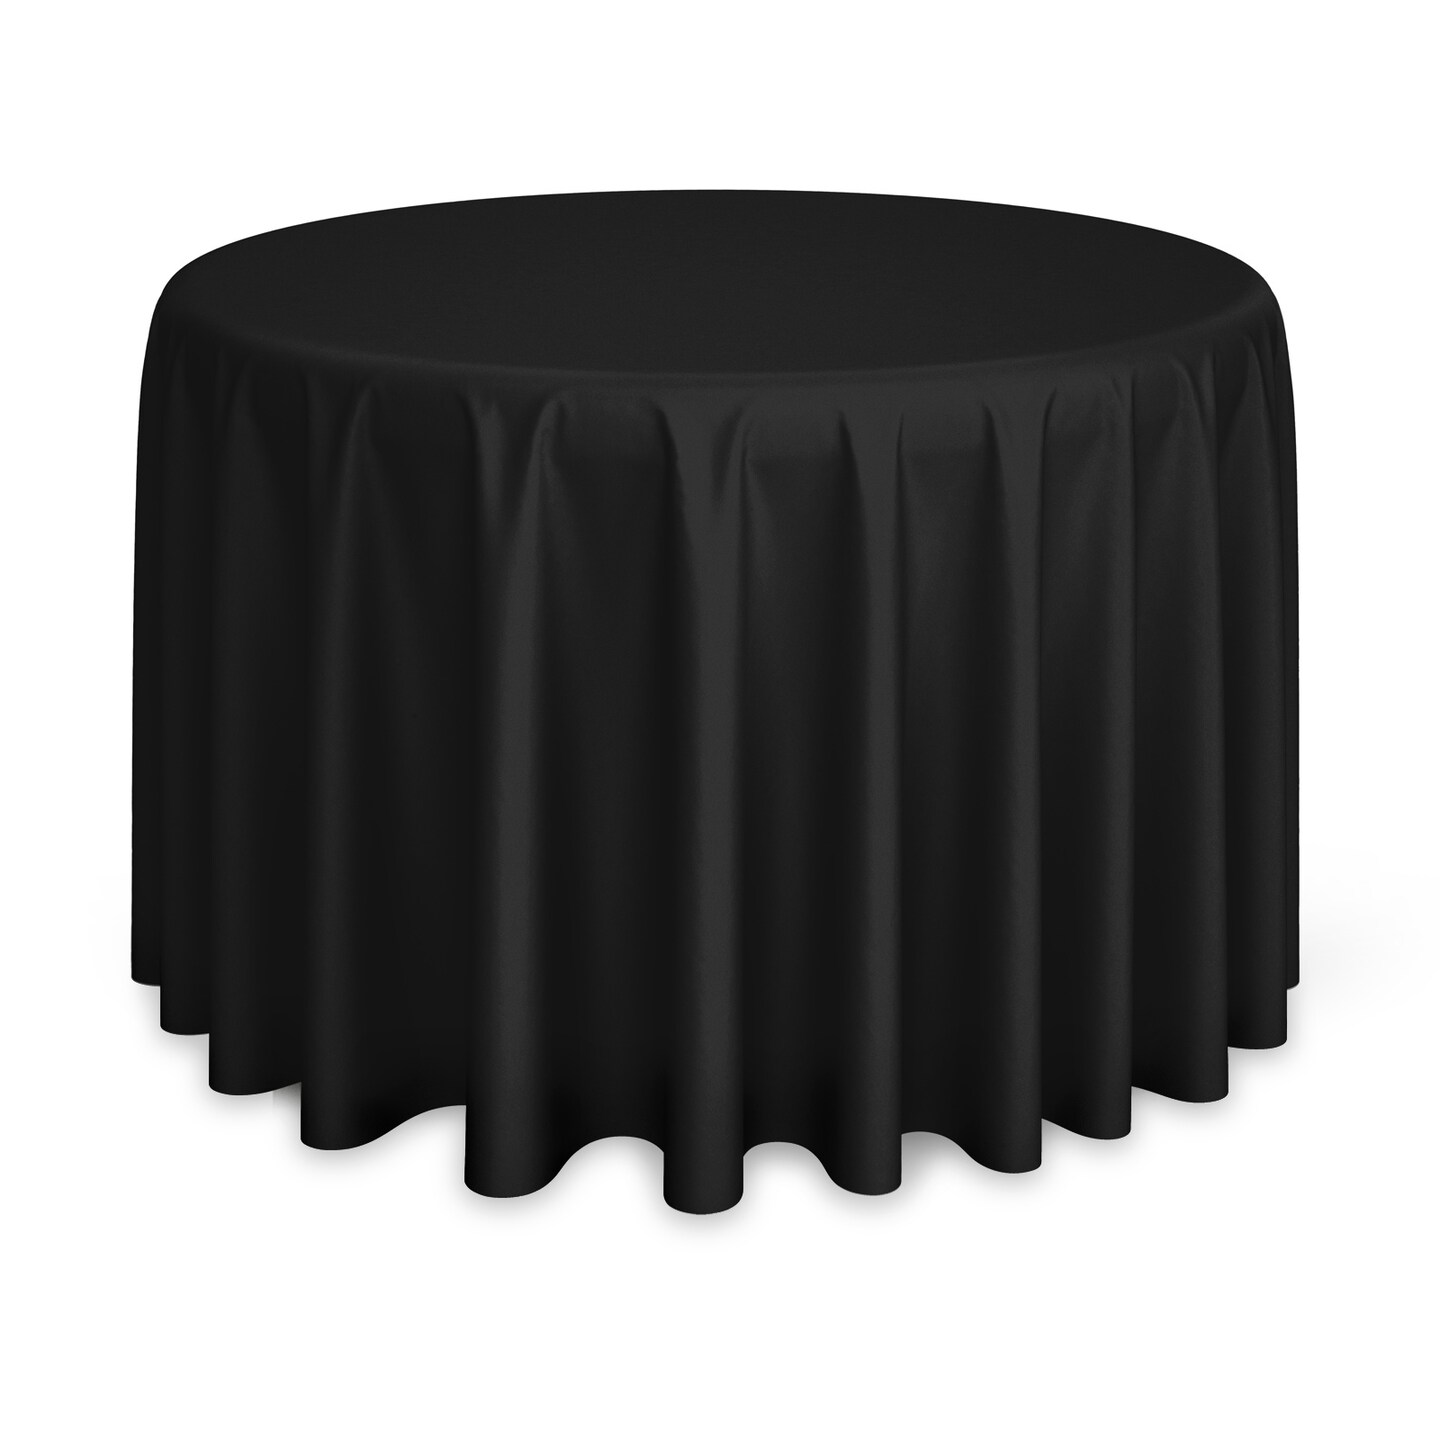 Lann's Linens - 5 Premium Tablecloths for Wedding/Banquet/Restaurant - Polyester Fabric Table Cloths